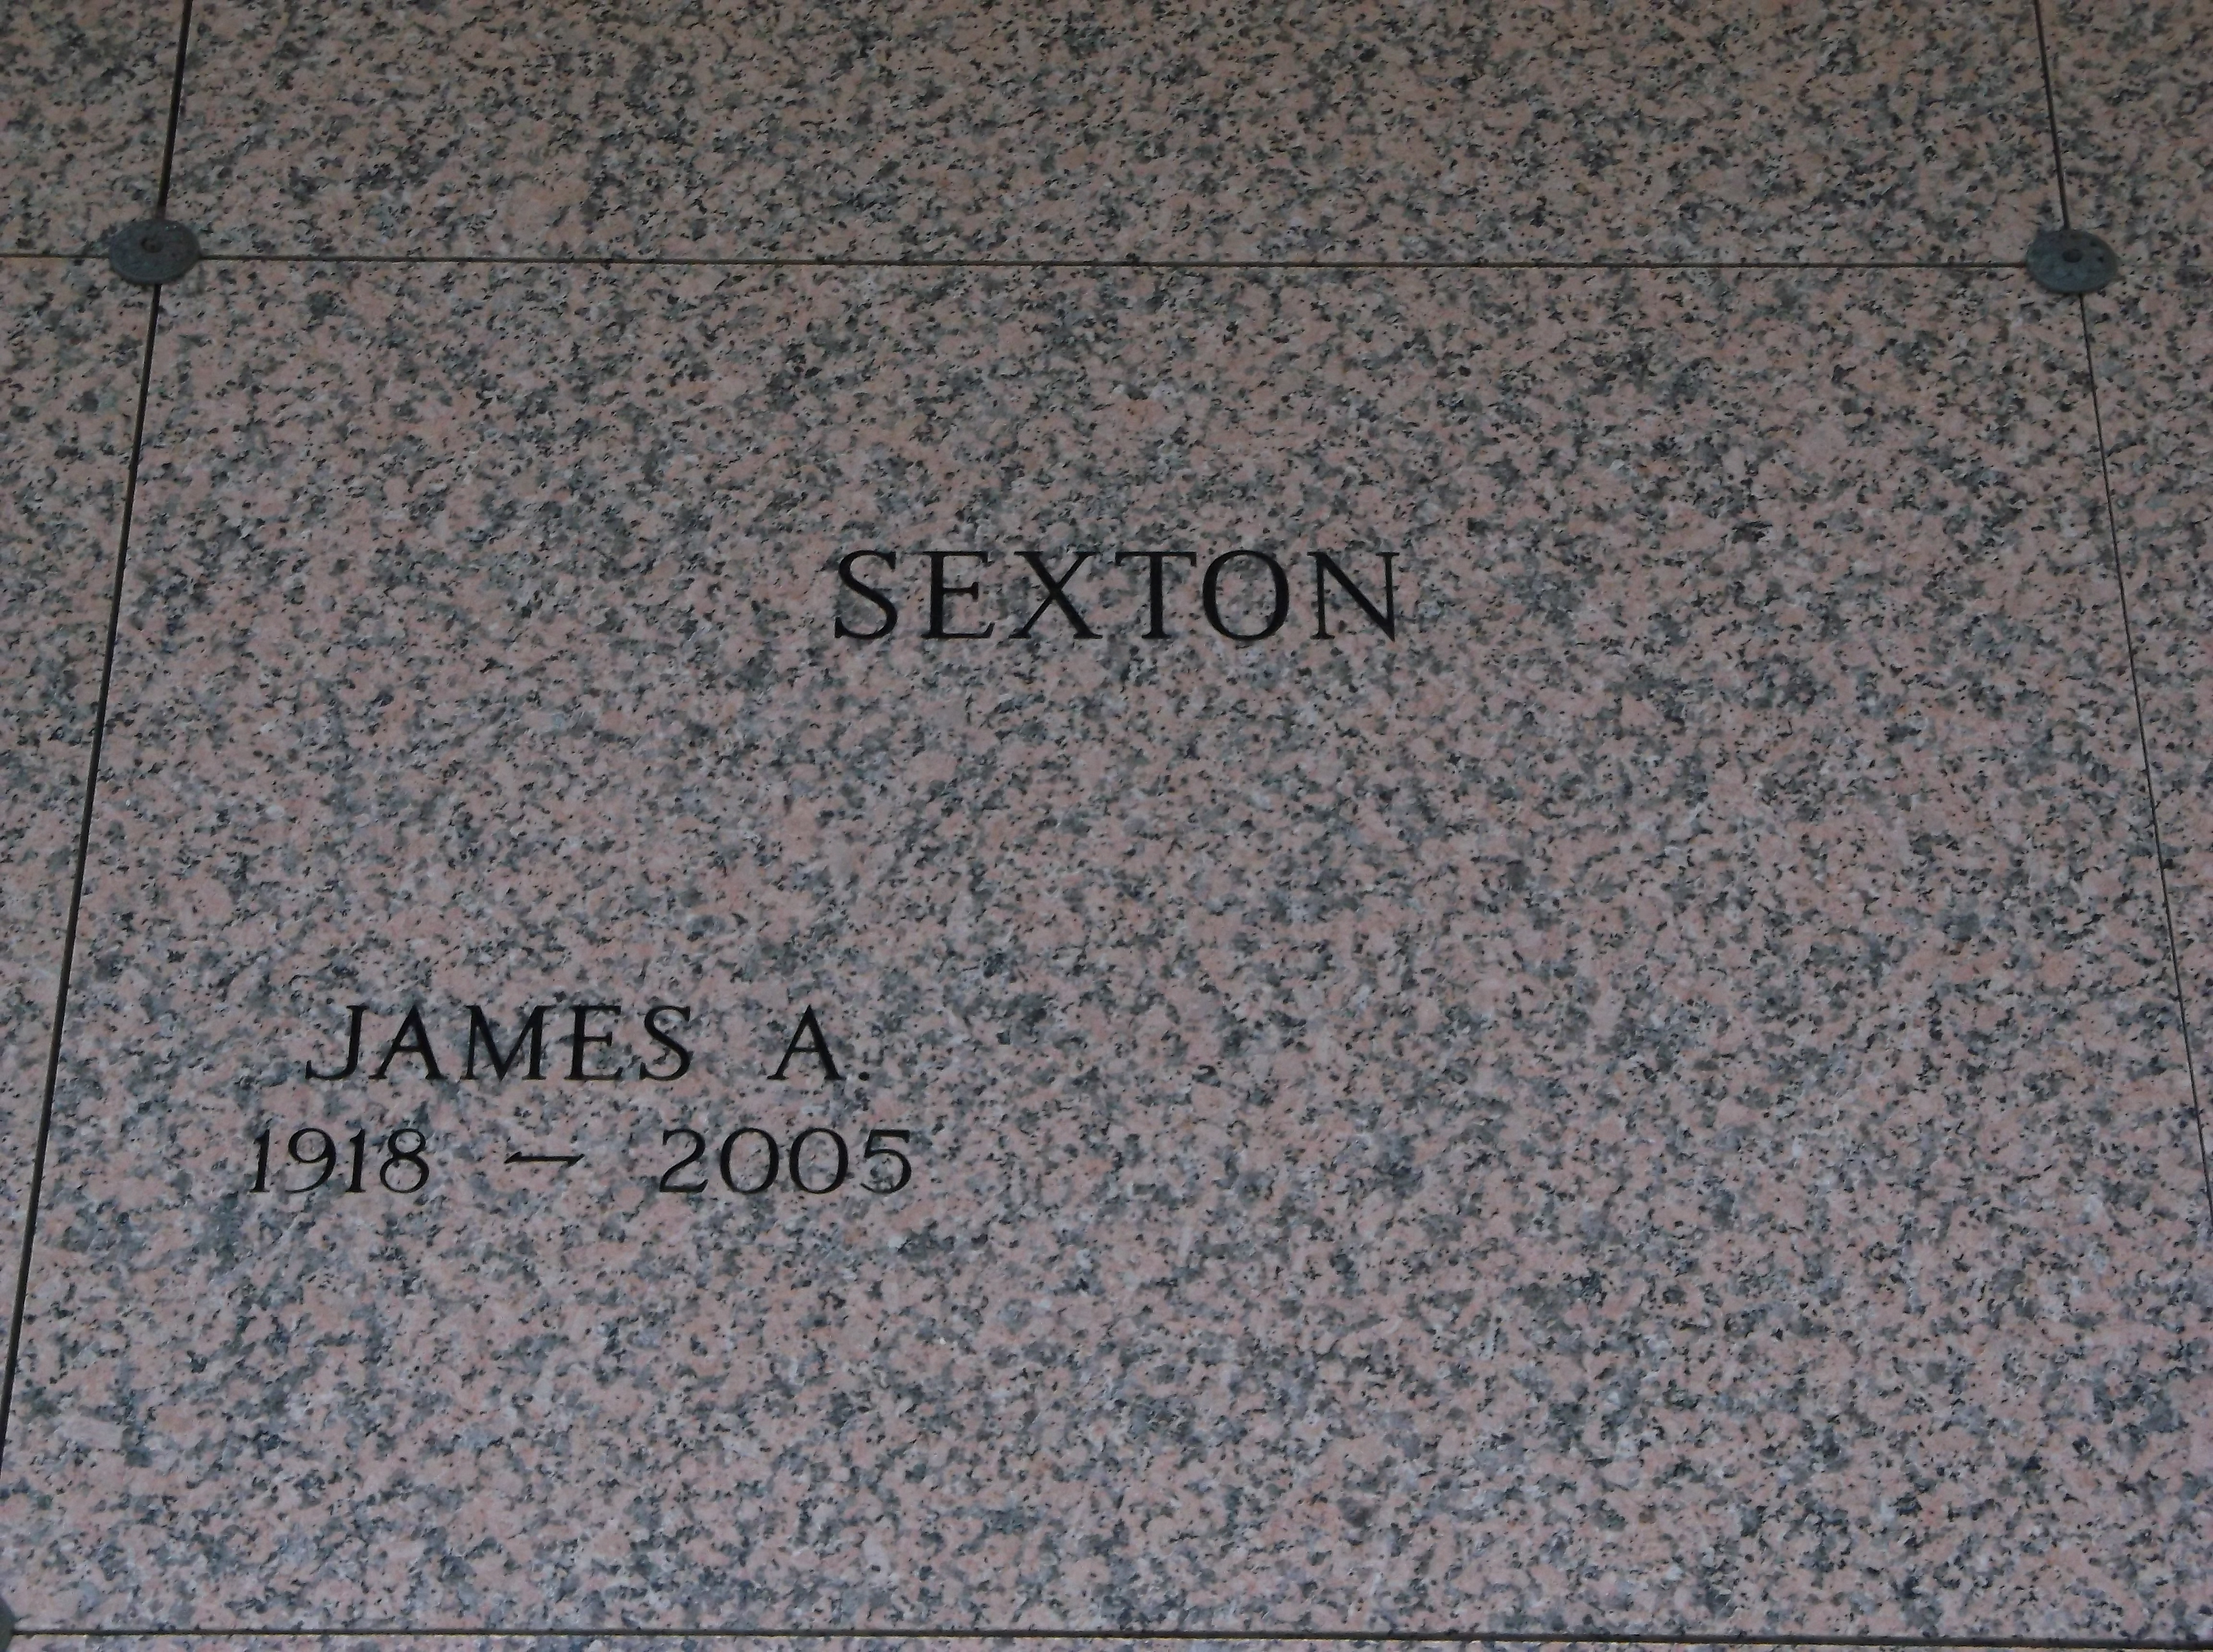 James A Sexton